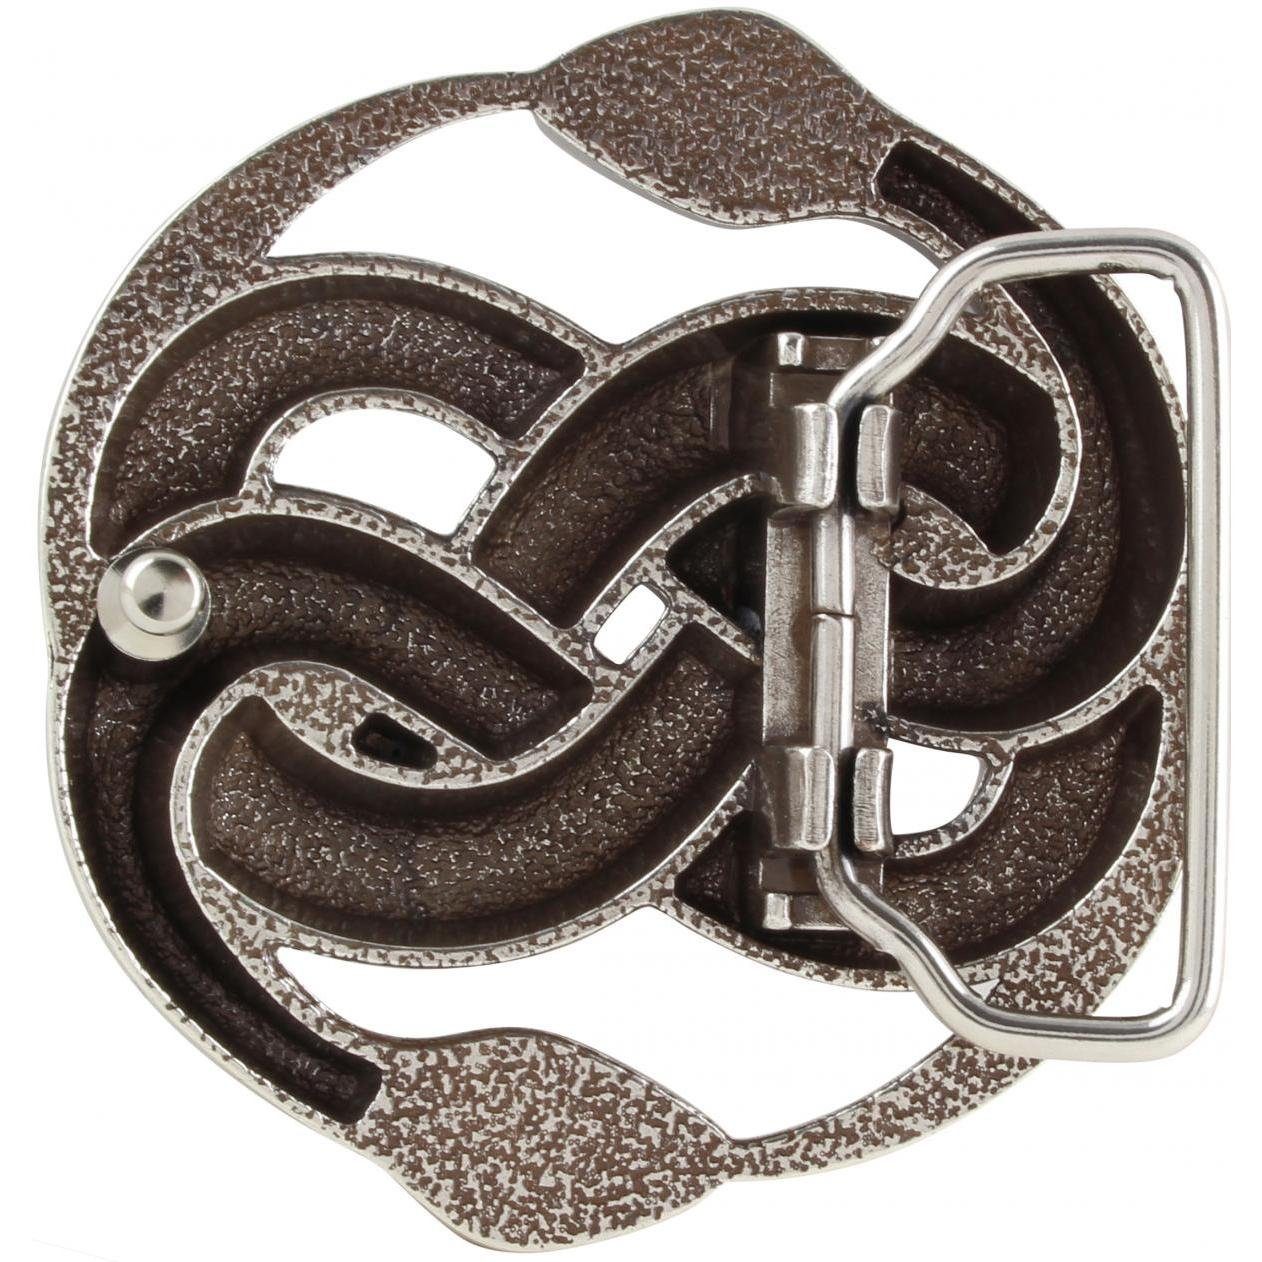 Gürtelschnalle - Snakes Wechselschließe 40mm Buckle cm 4,0 Gürtelschließe BELTINGER - Schlange